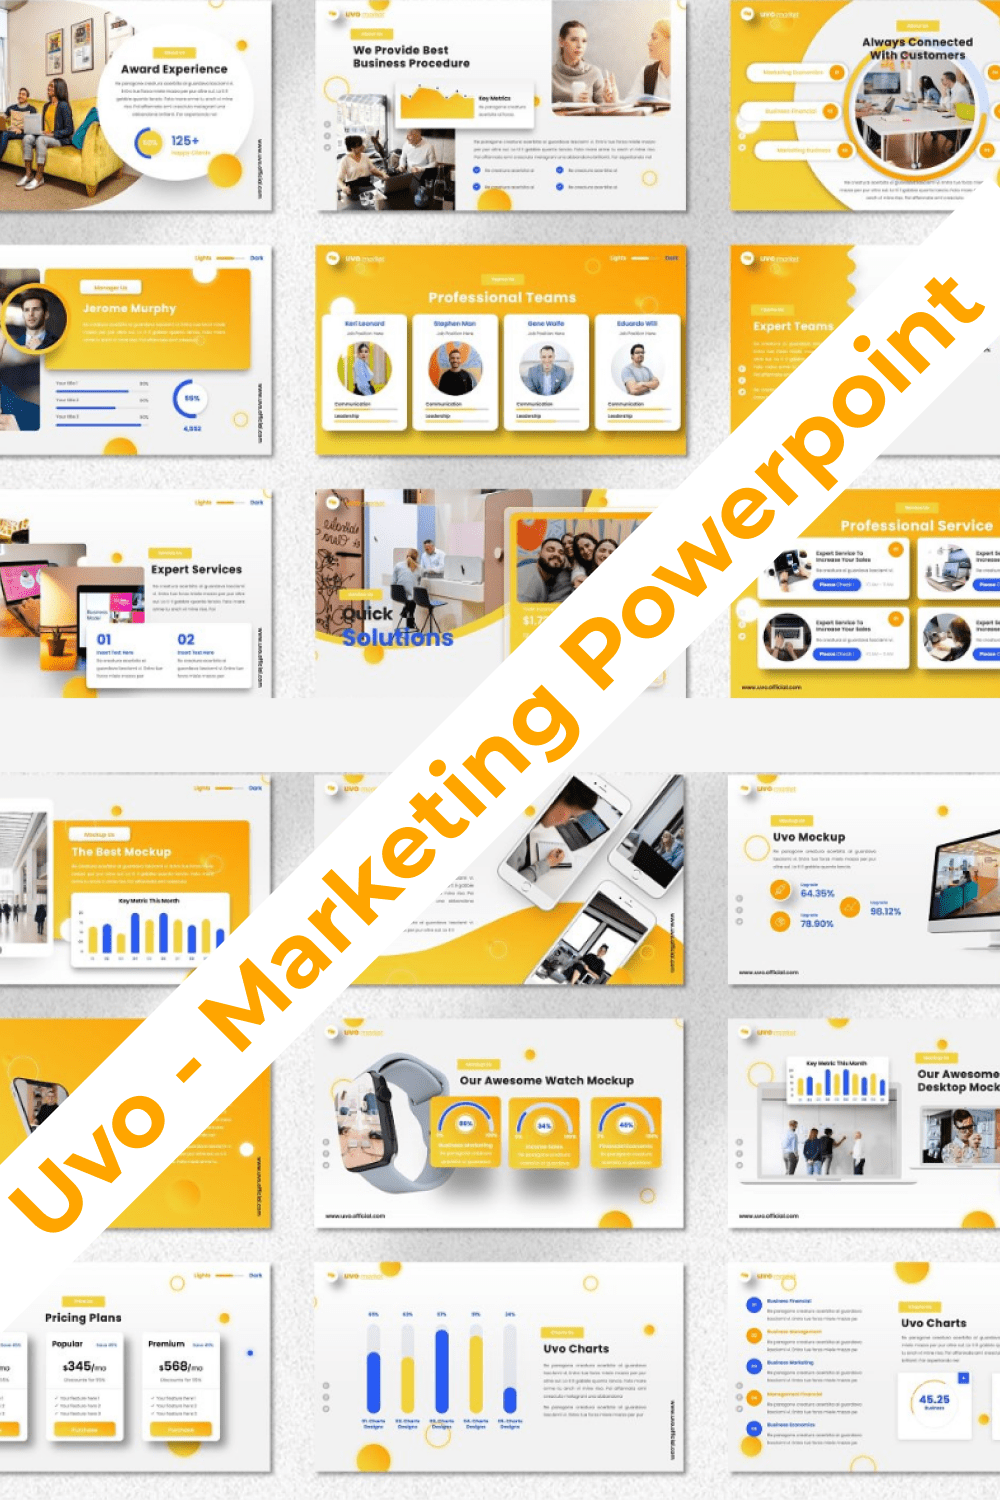 Uvo - Marketing Powerpoint Pinterest.